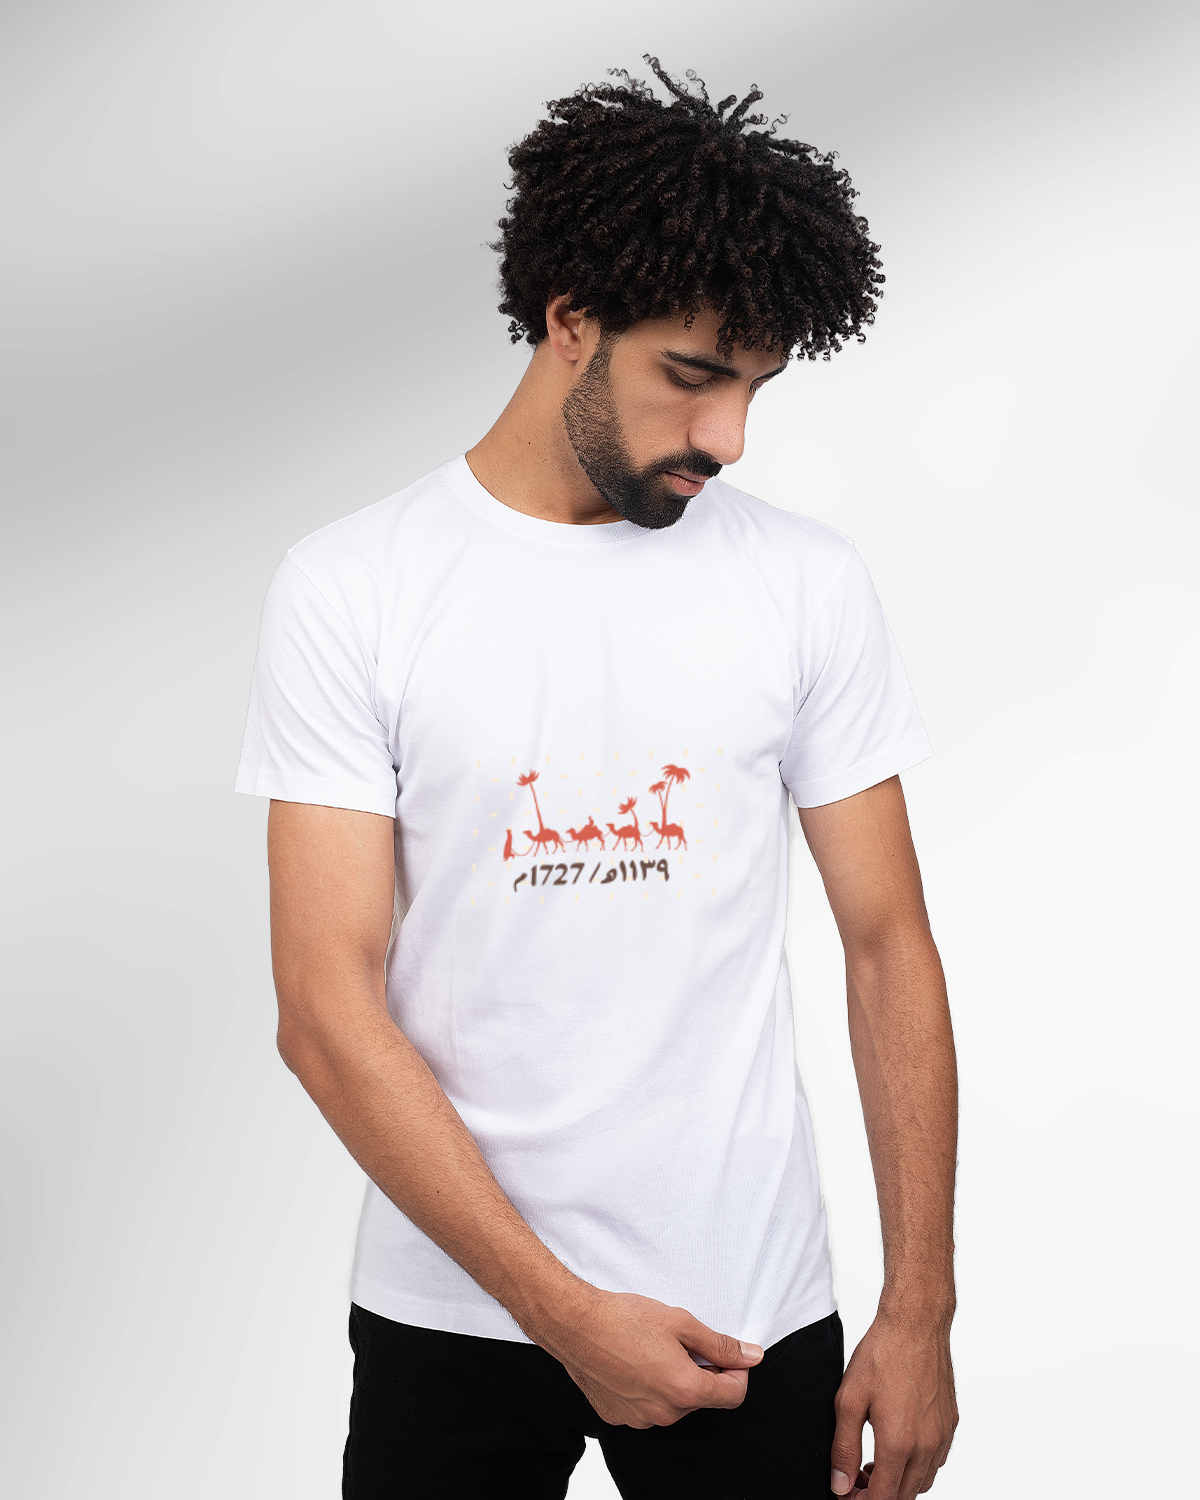 Men's Foundation Day T-shirt (1139 AH/1727 AD)